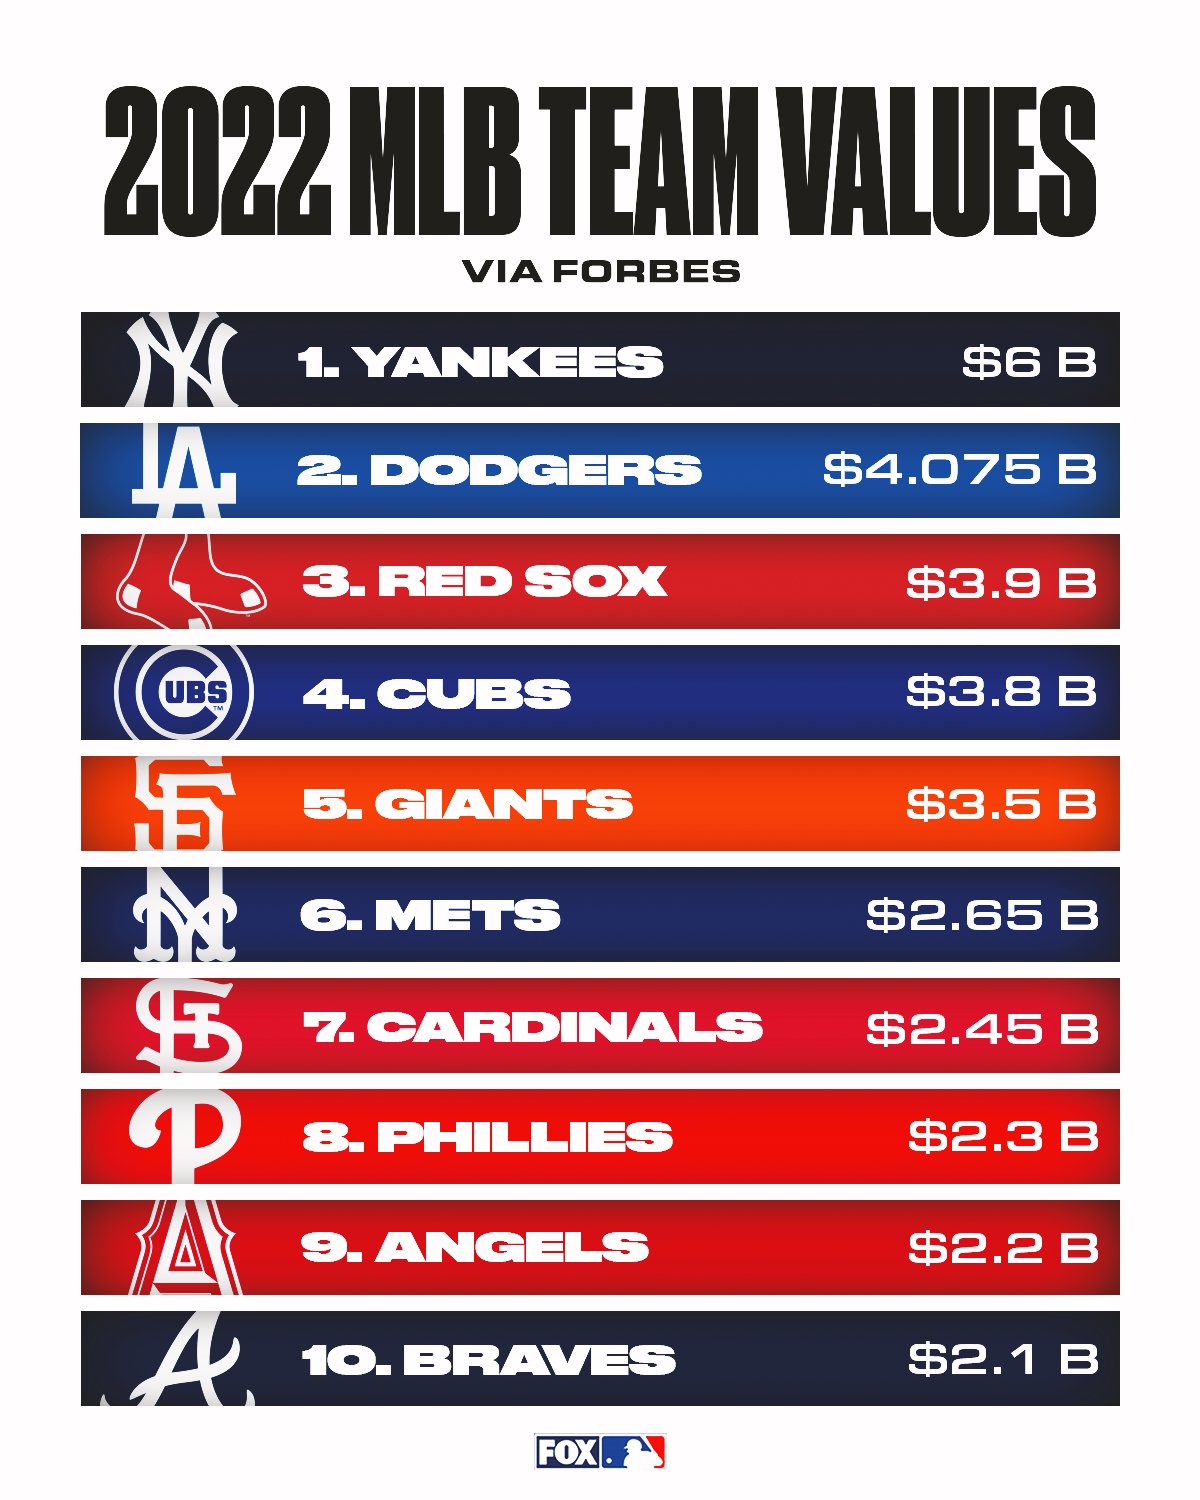 MLB Team Valuations